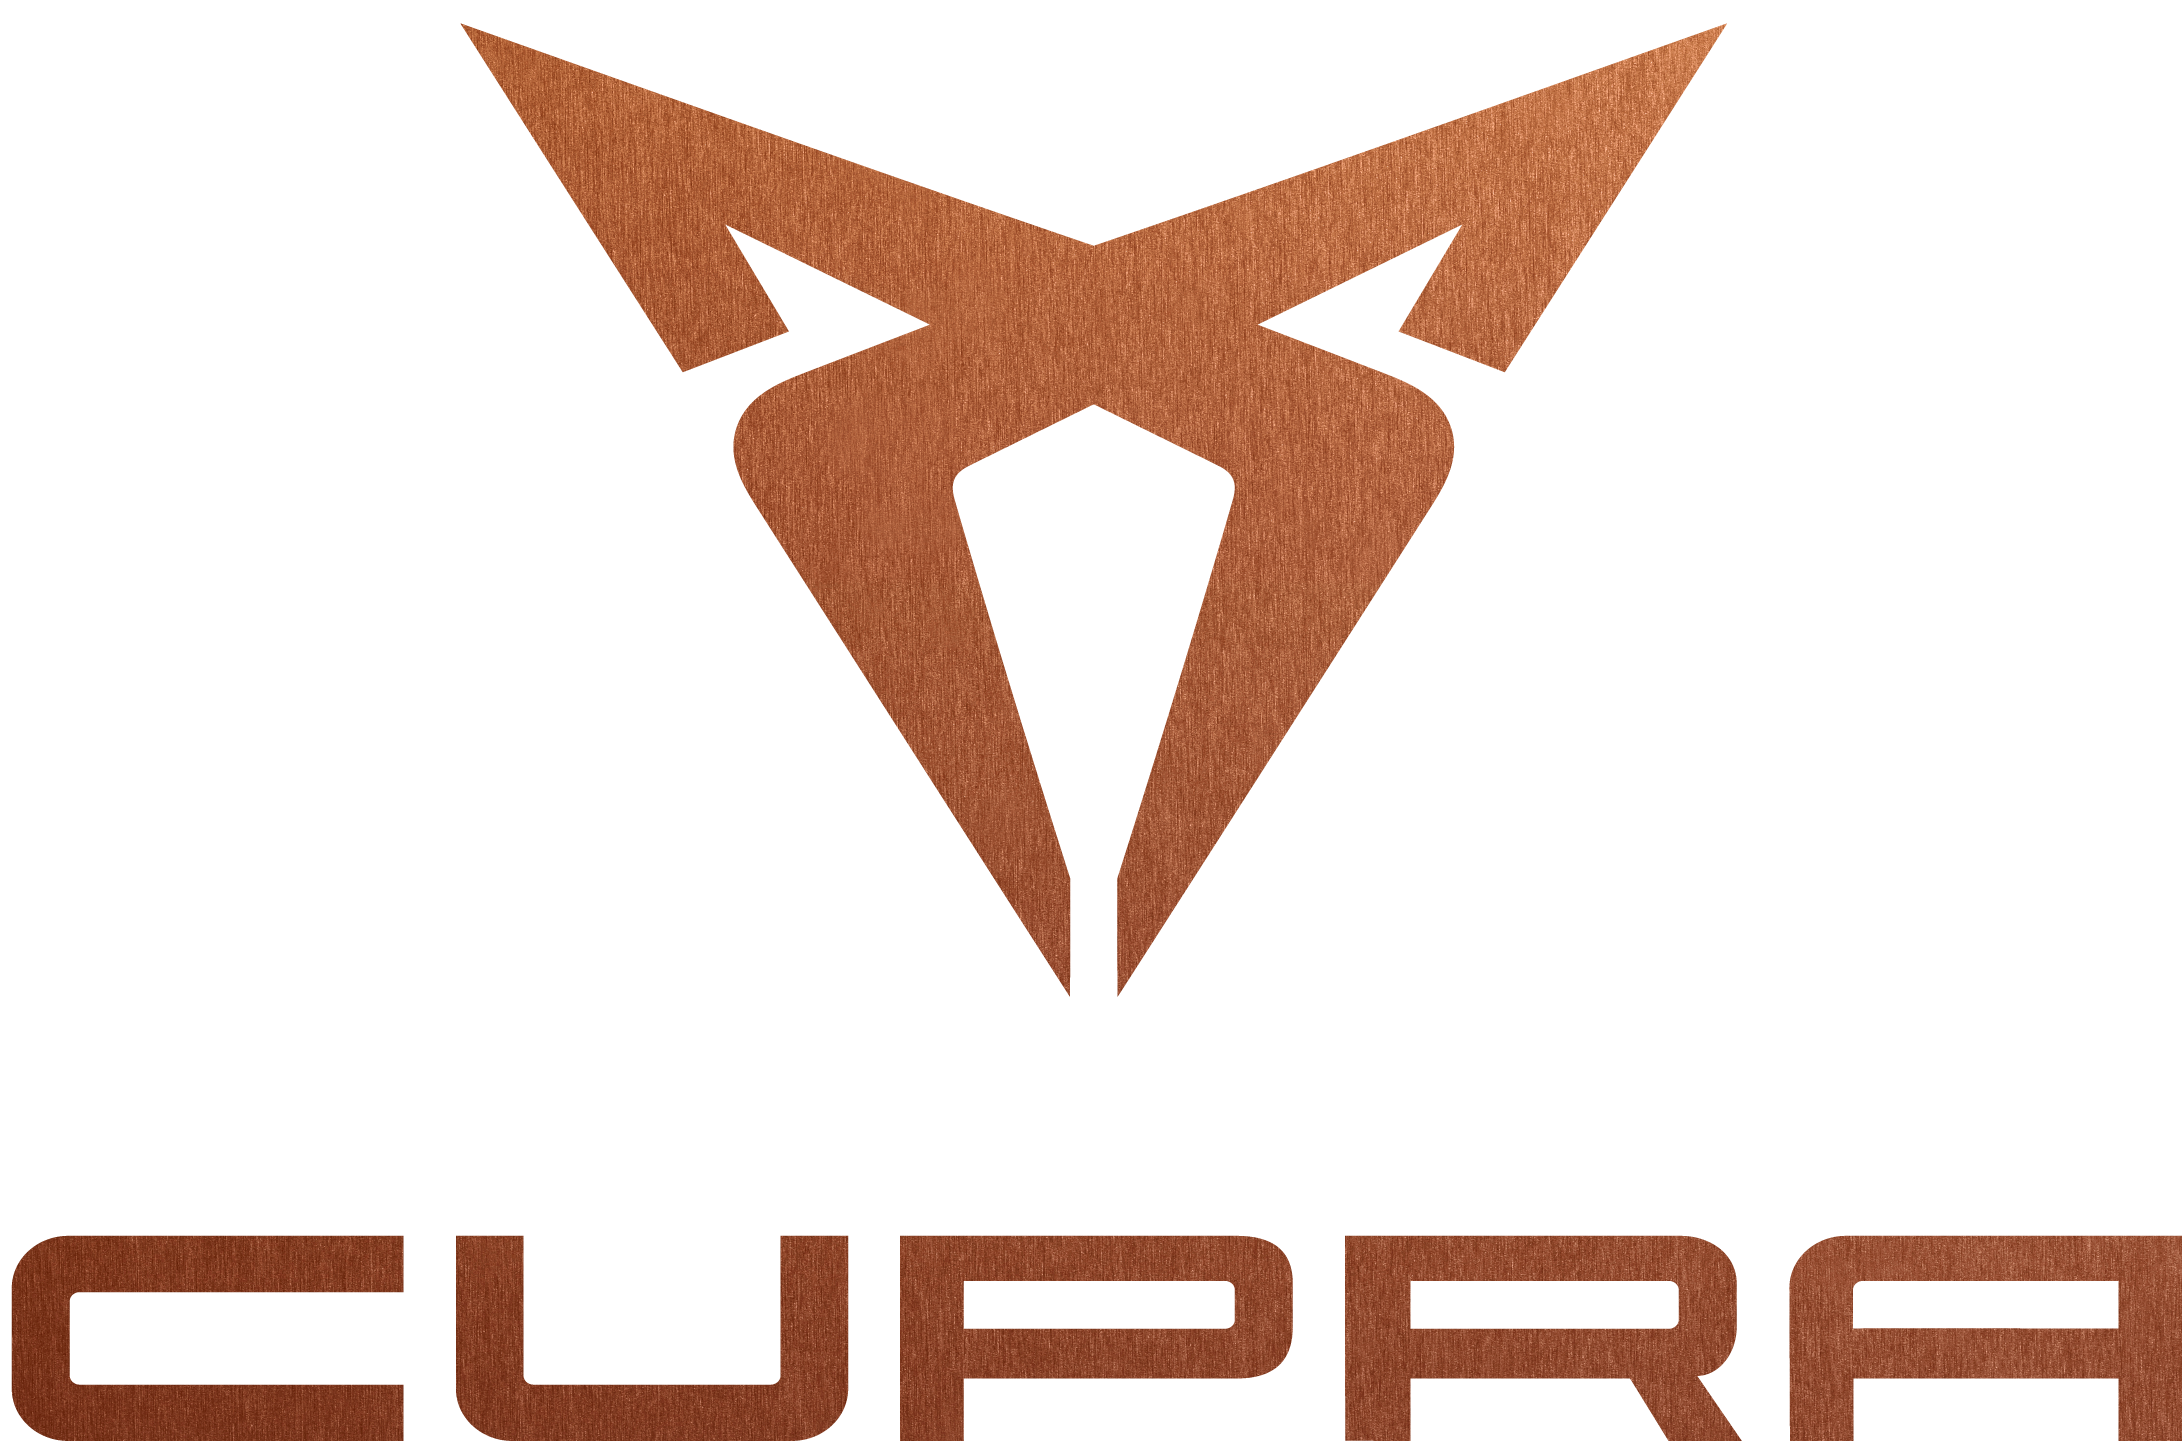 Logo_Cupra